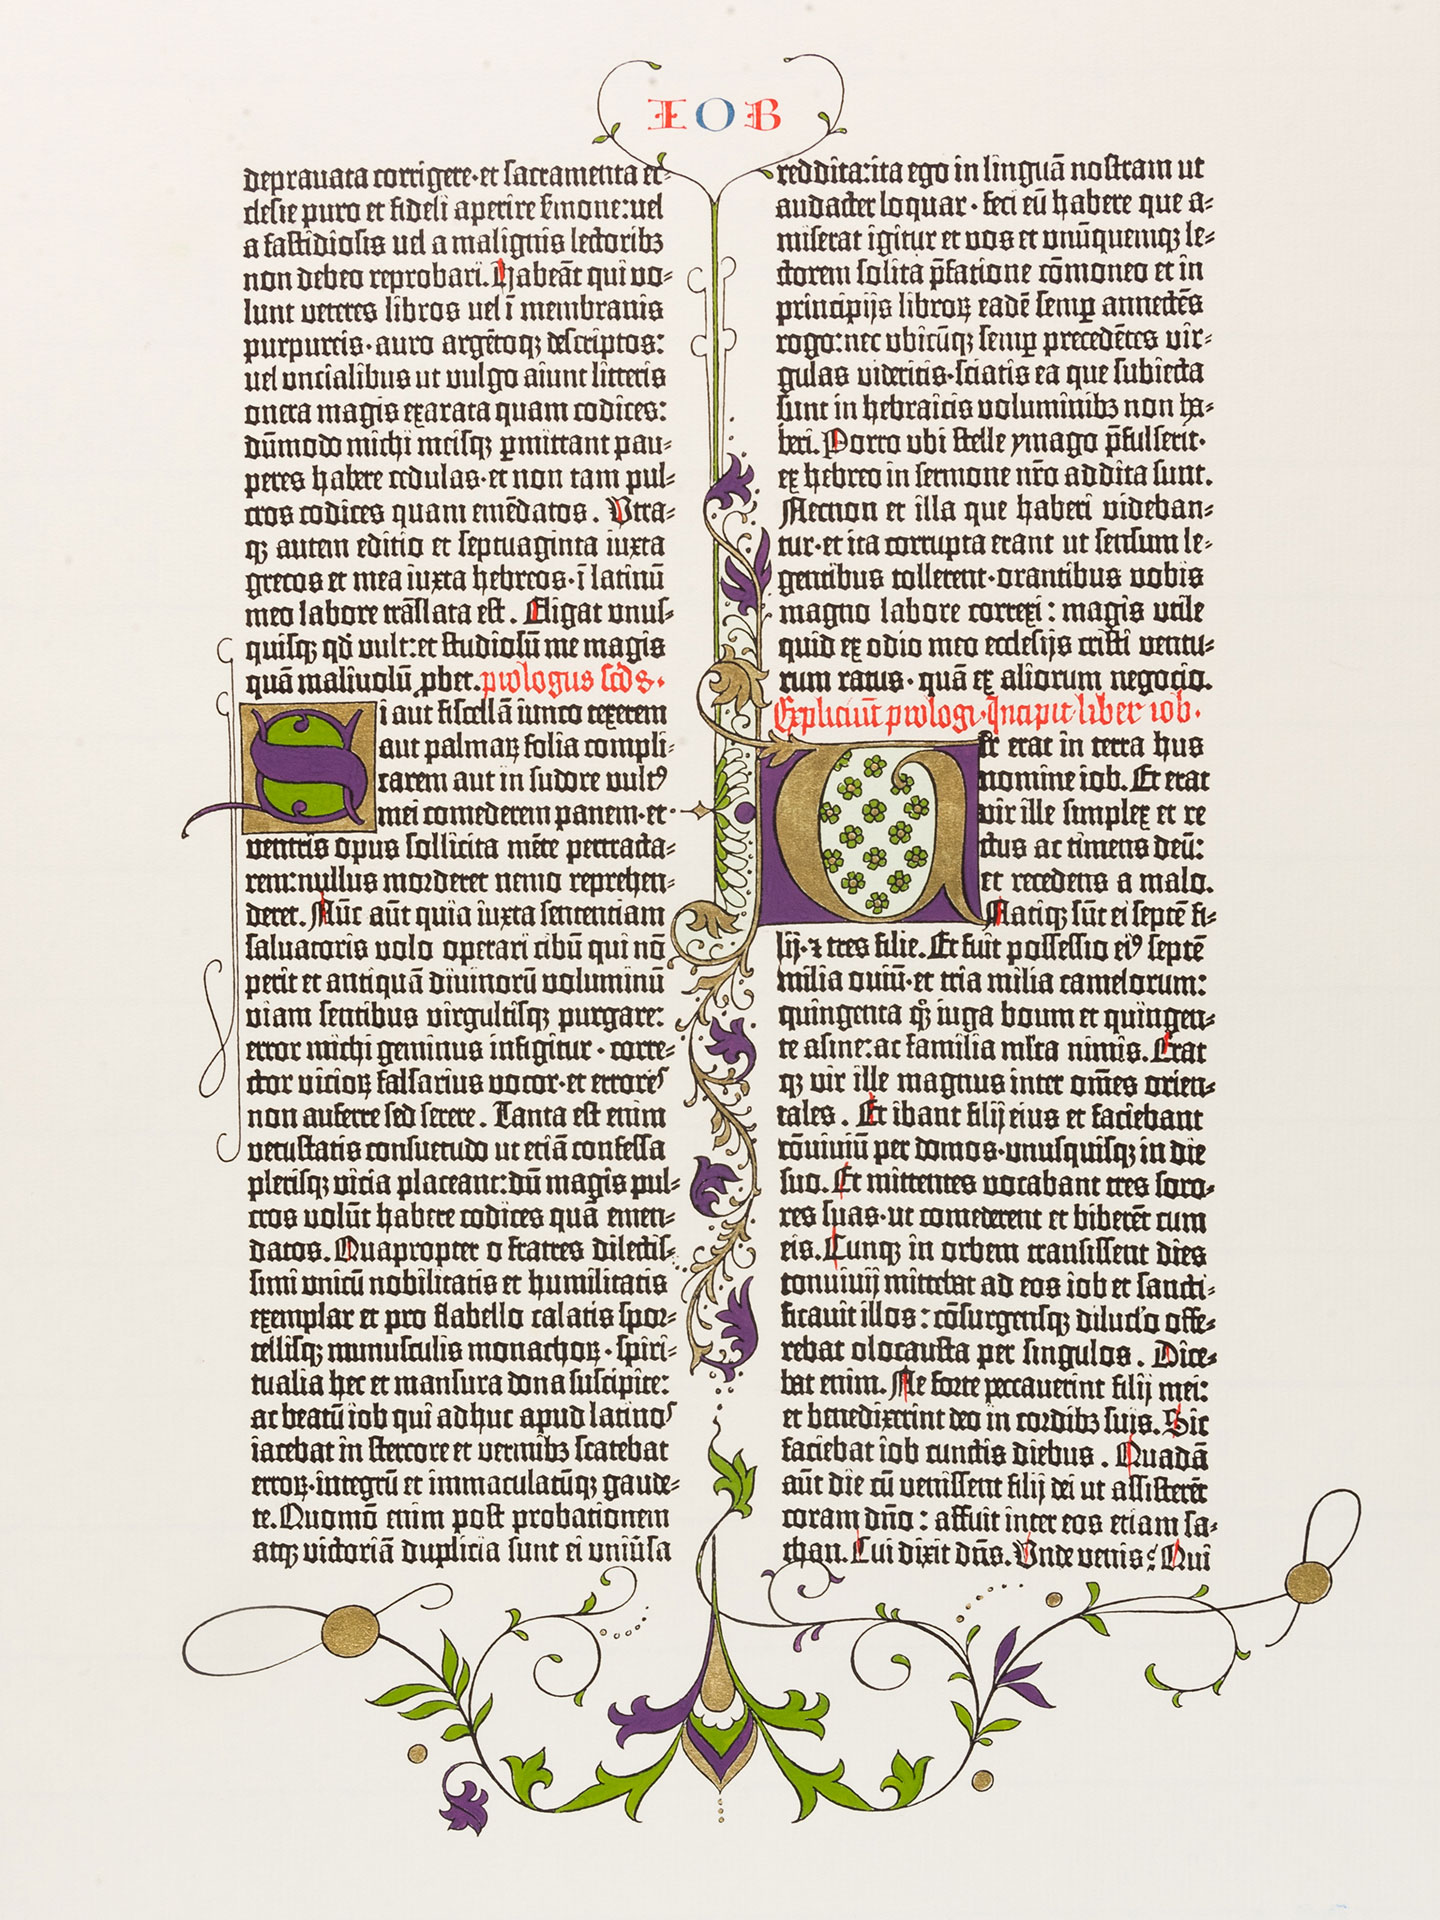 Das Buch Hiob. Pressendruck Gutenberg-Bibel